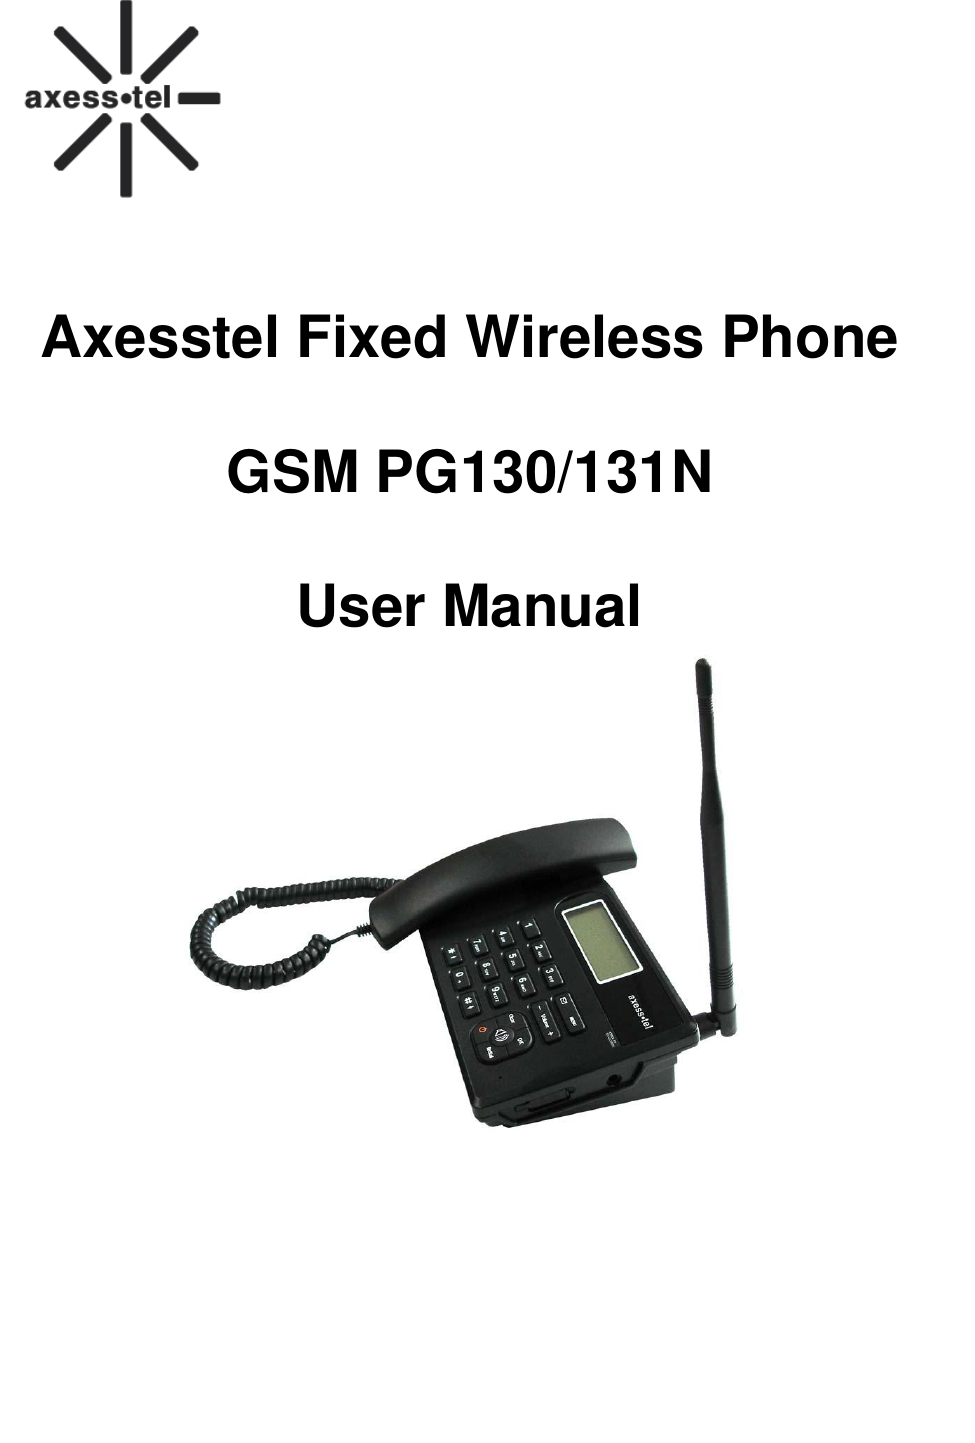        Axesstel Fixed Wireless Phone  GSM PG130/131N   User Manual           